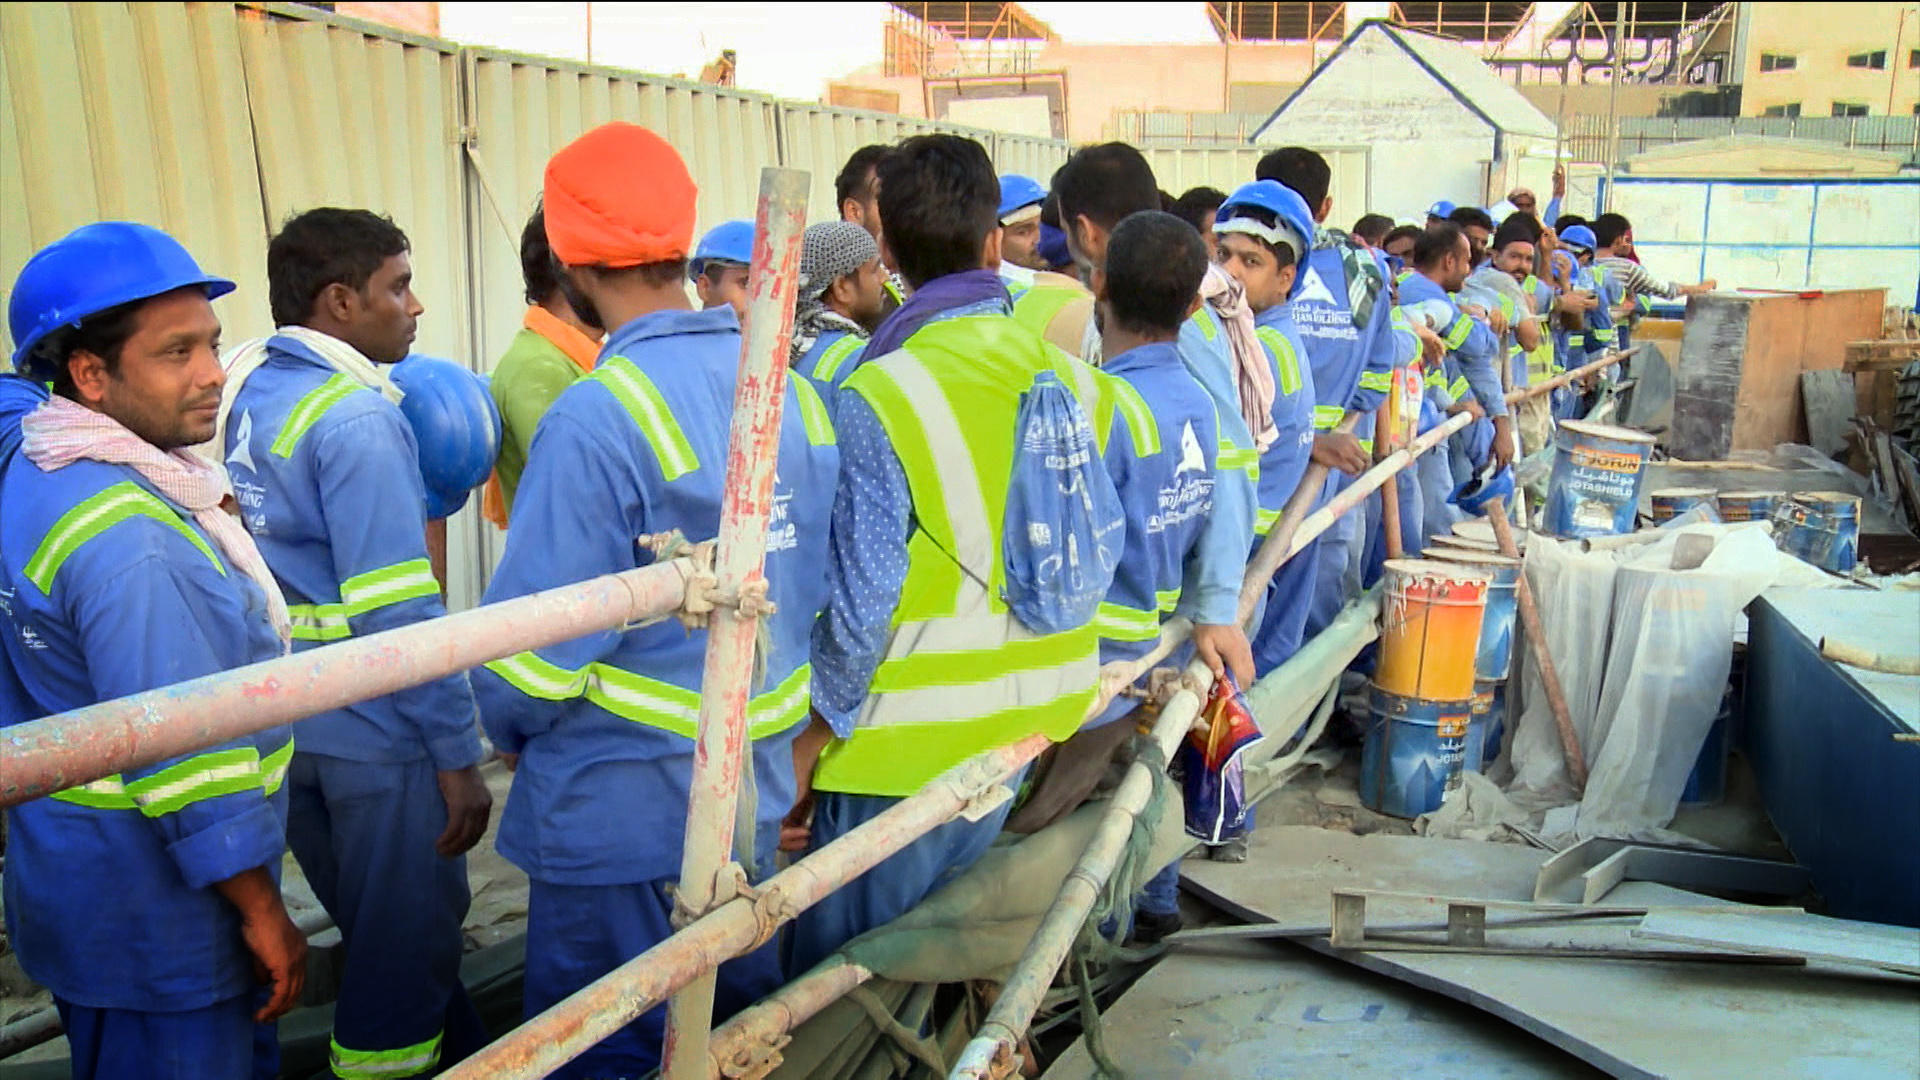 Workers in Abu Dhabi